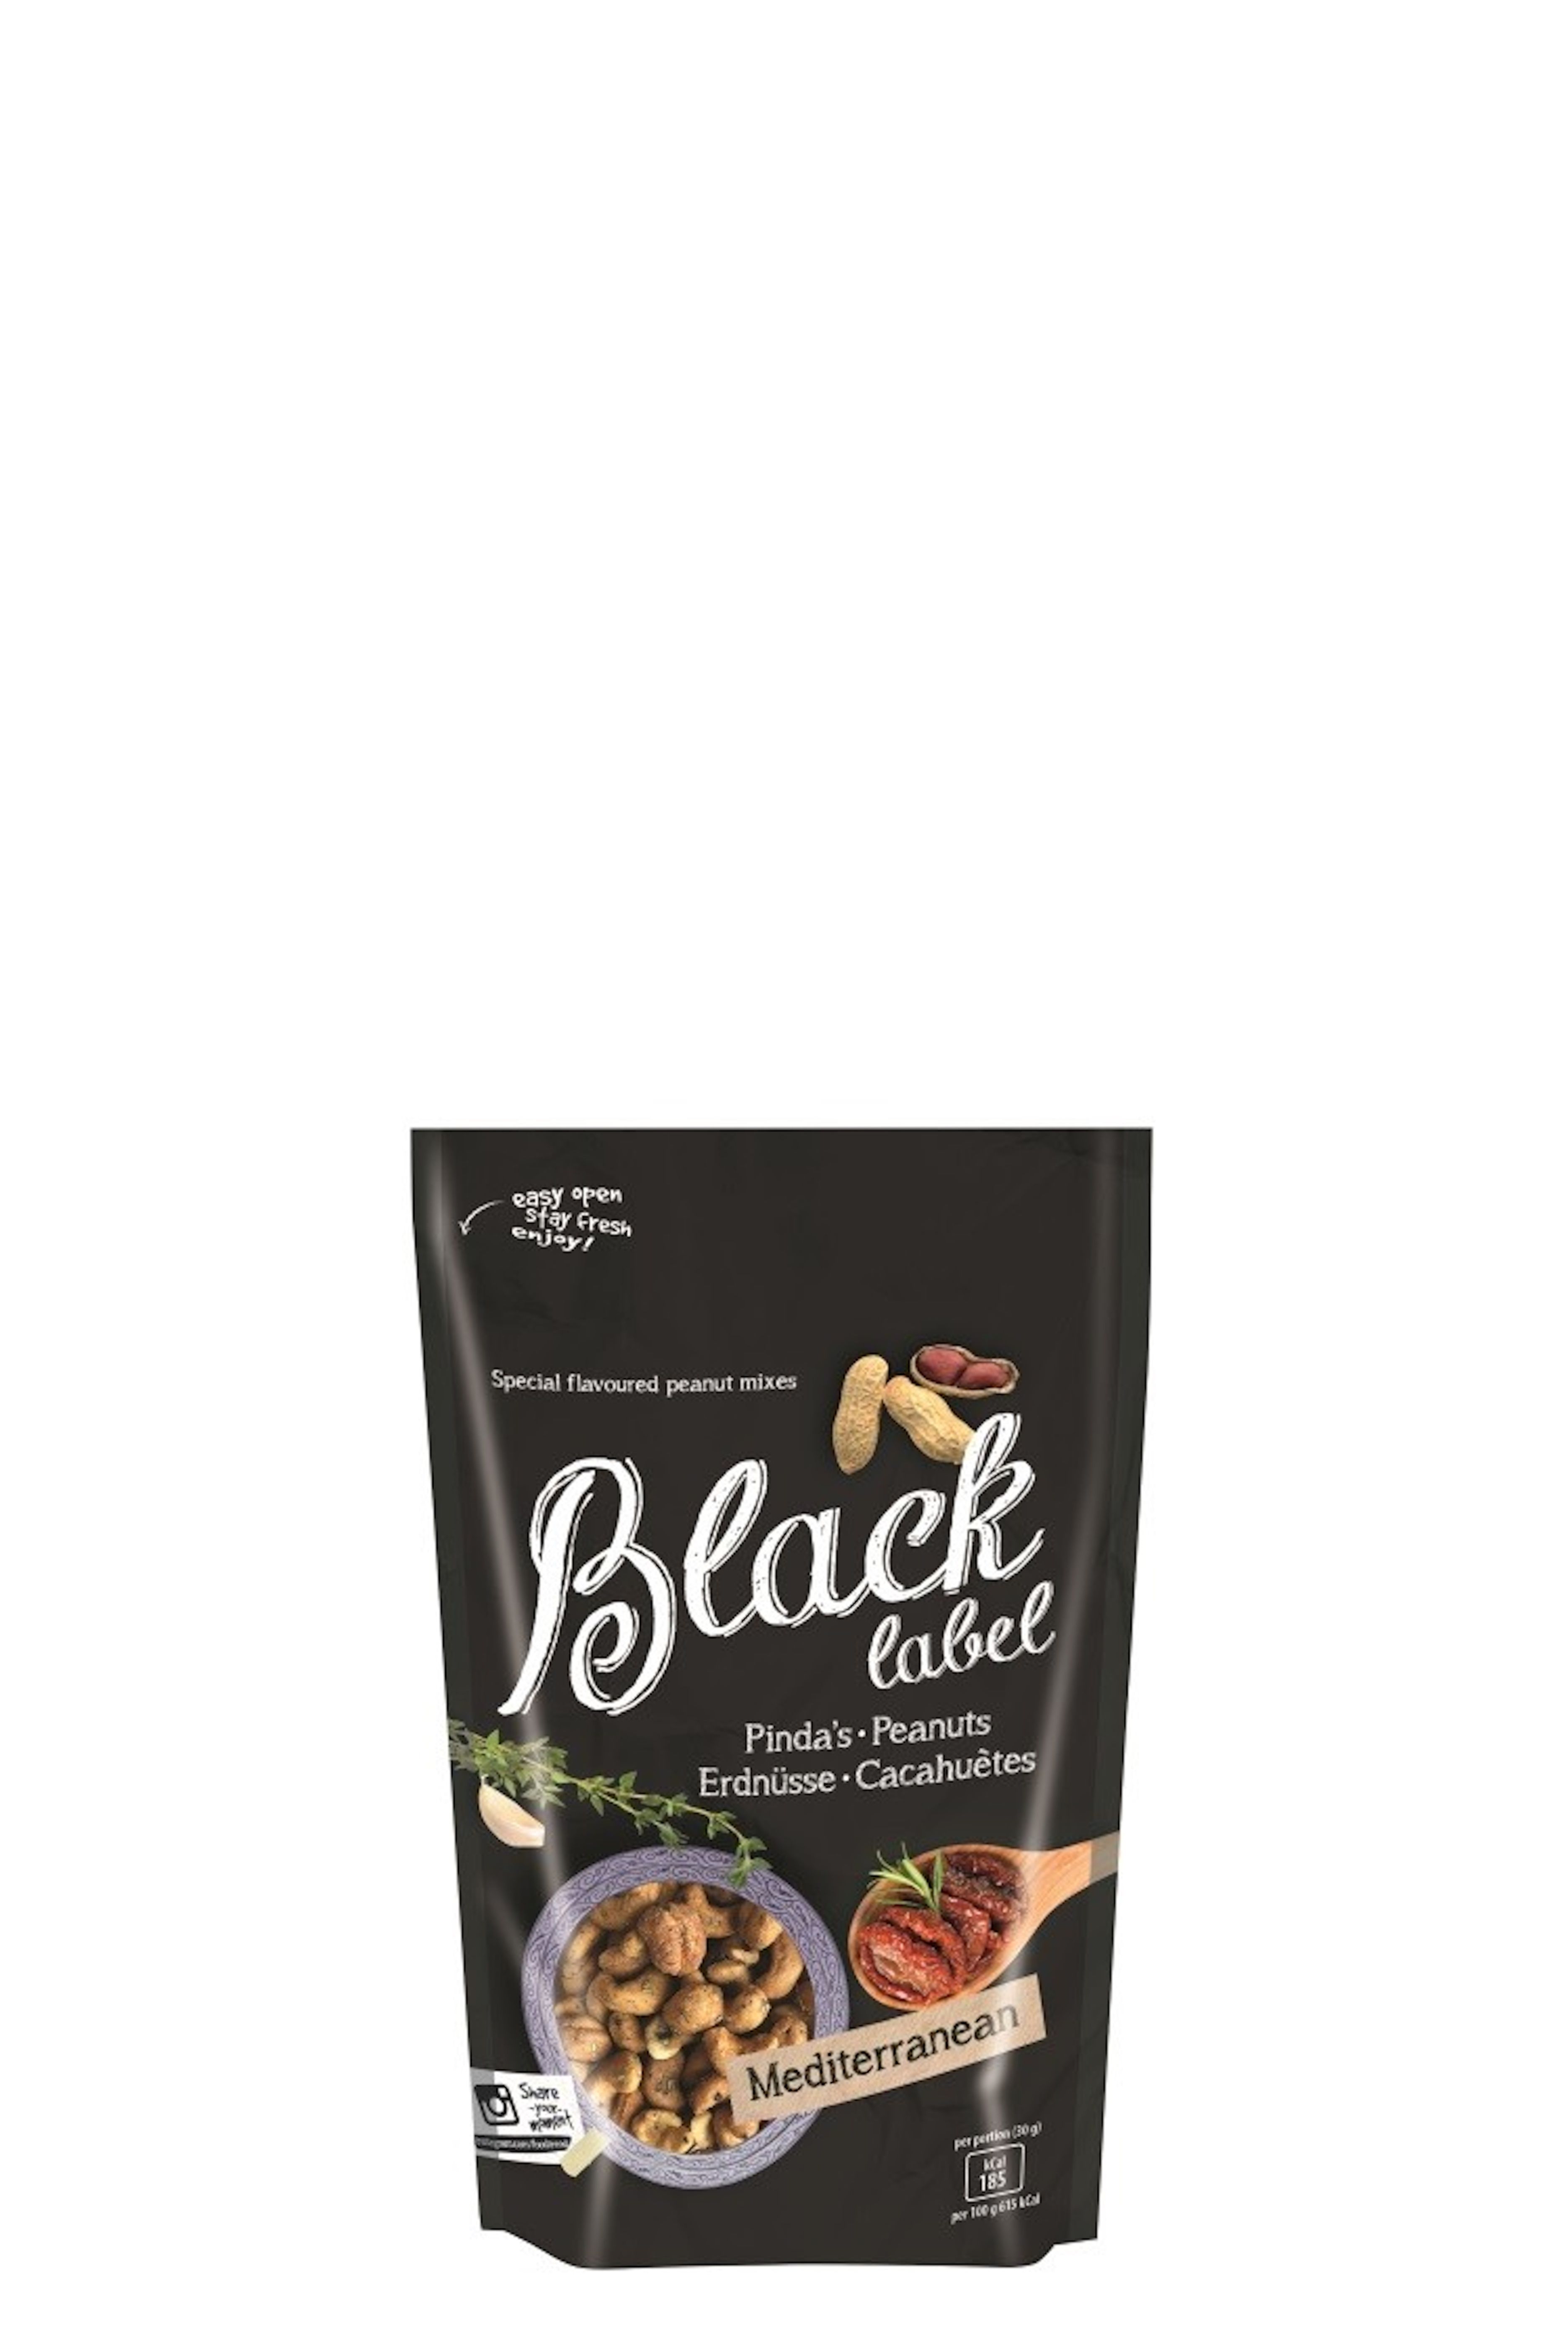 Erdnüsse Mediterran Black label